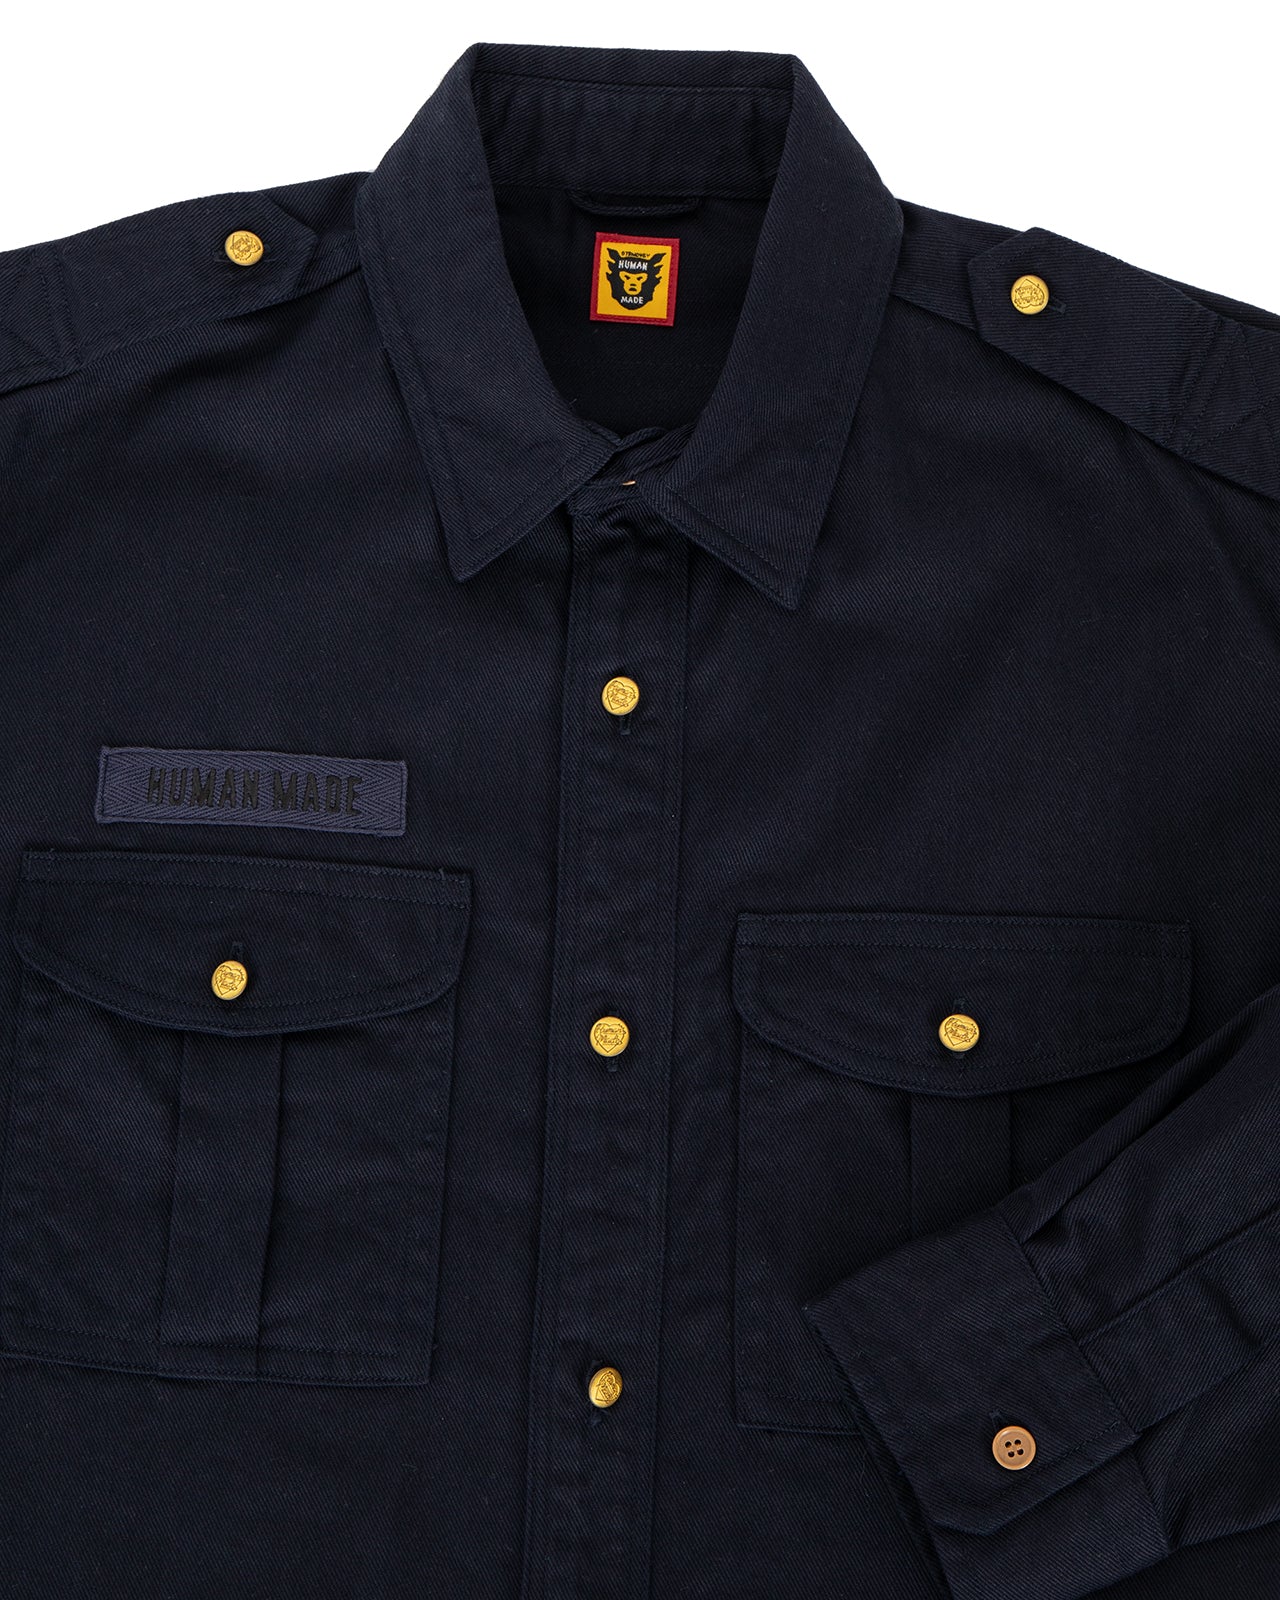 Human Made Boyscout Shirt, Navy